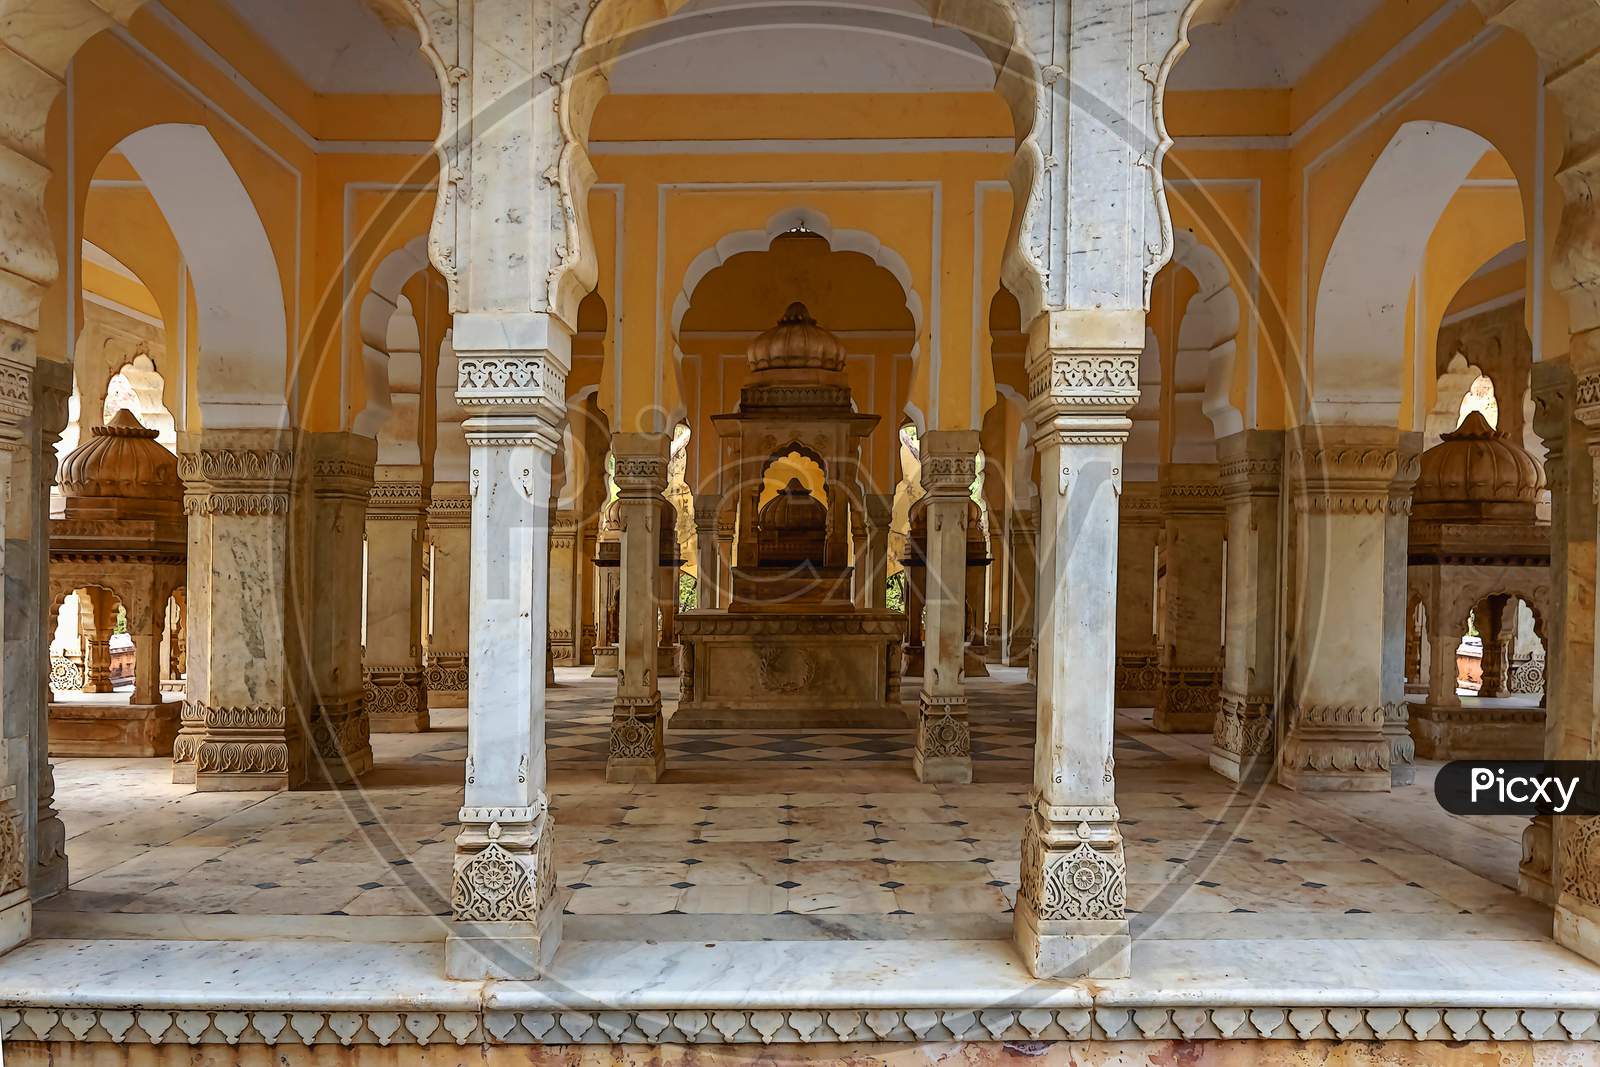 Royal Gaitor Tumbas / tombs, Gaitor Ki Chhatriyan, intricately carved stone monuments are the highlight at this royal crematory.